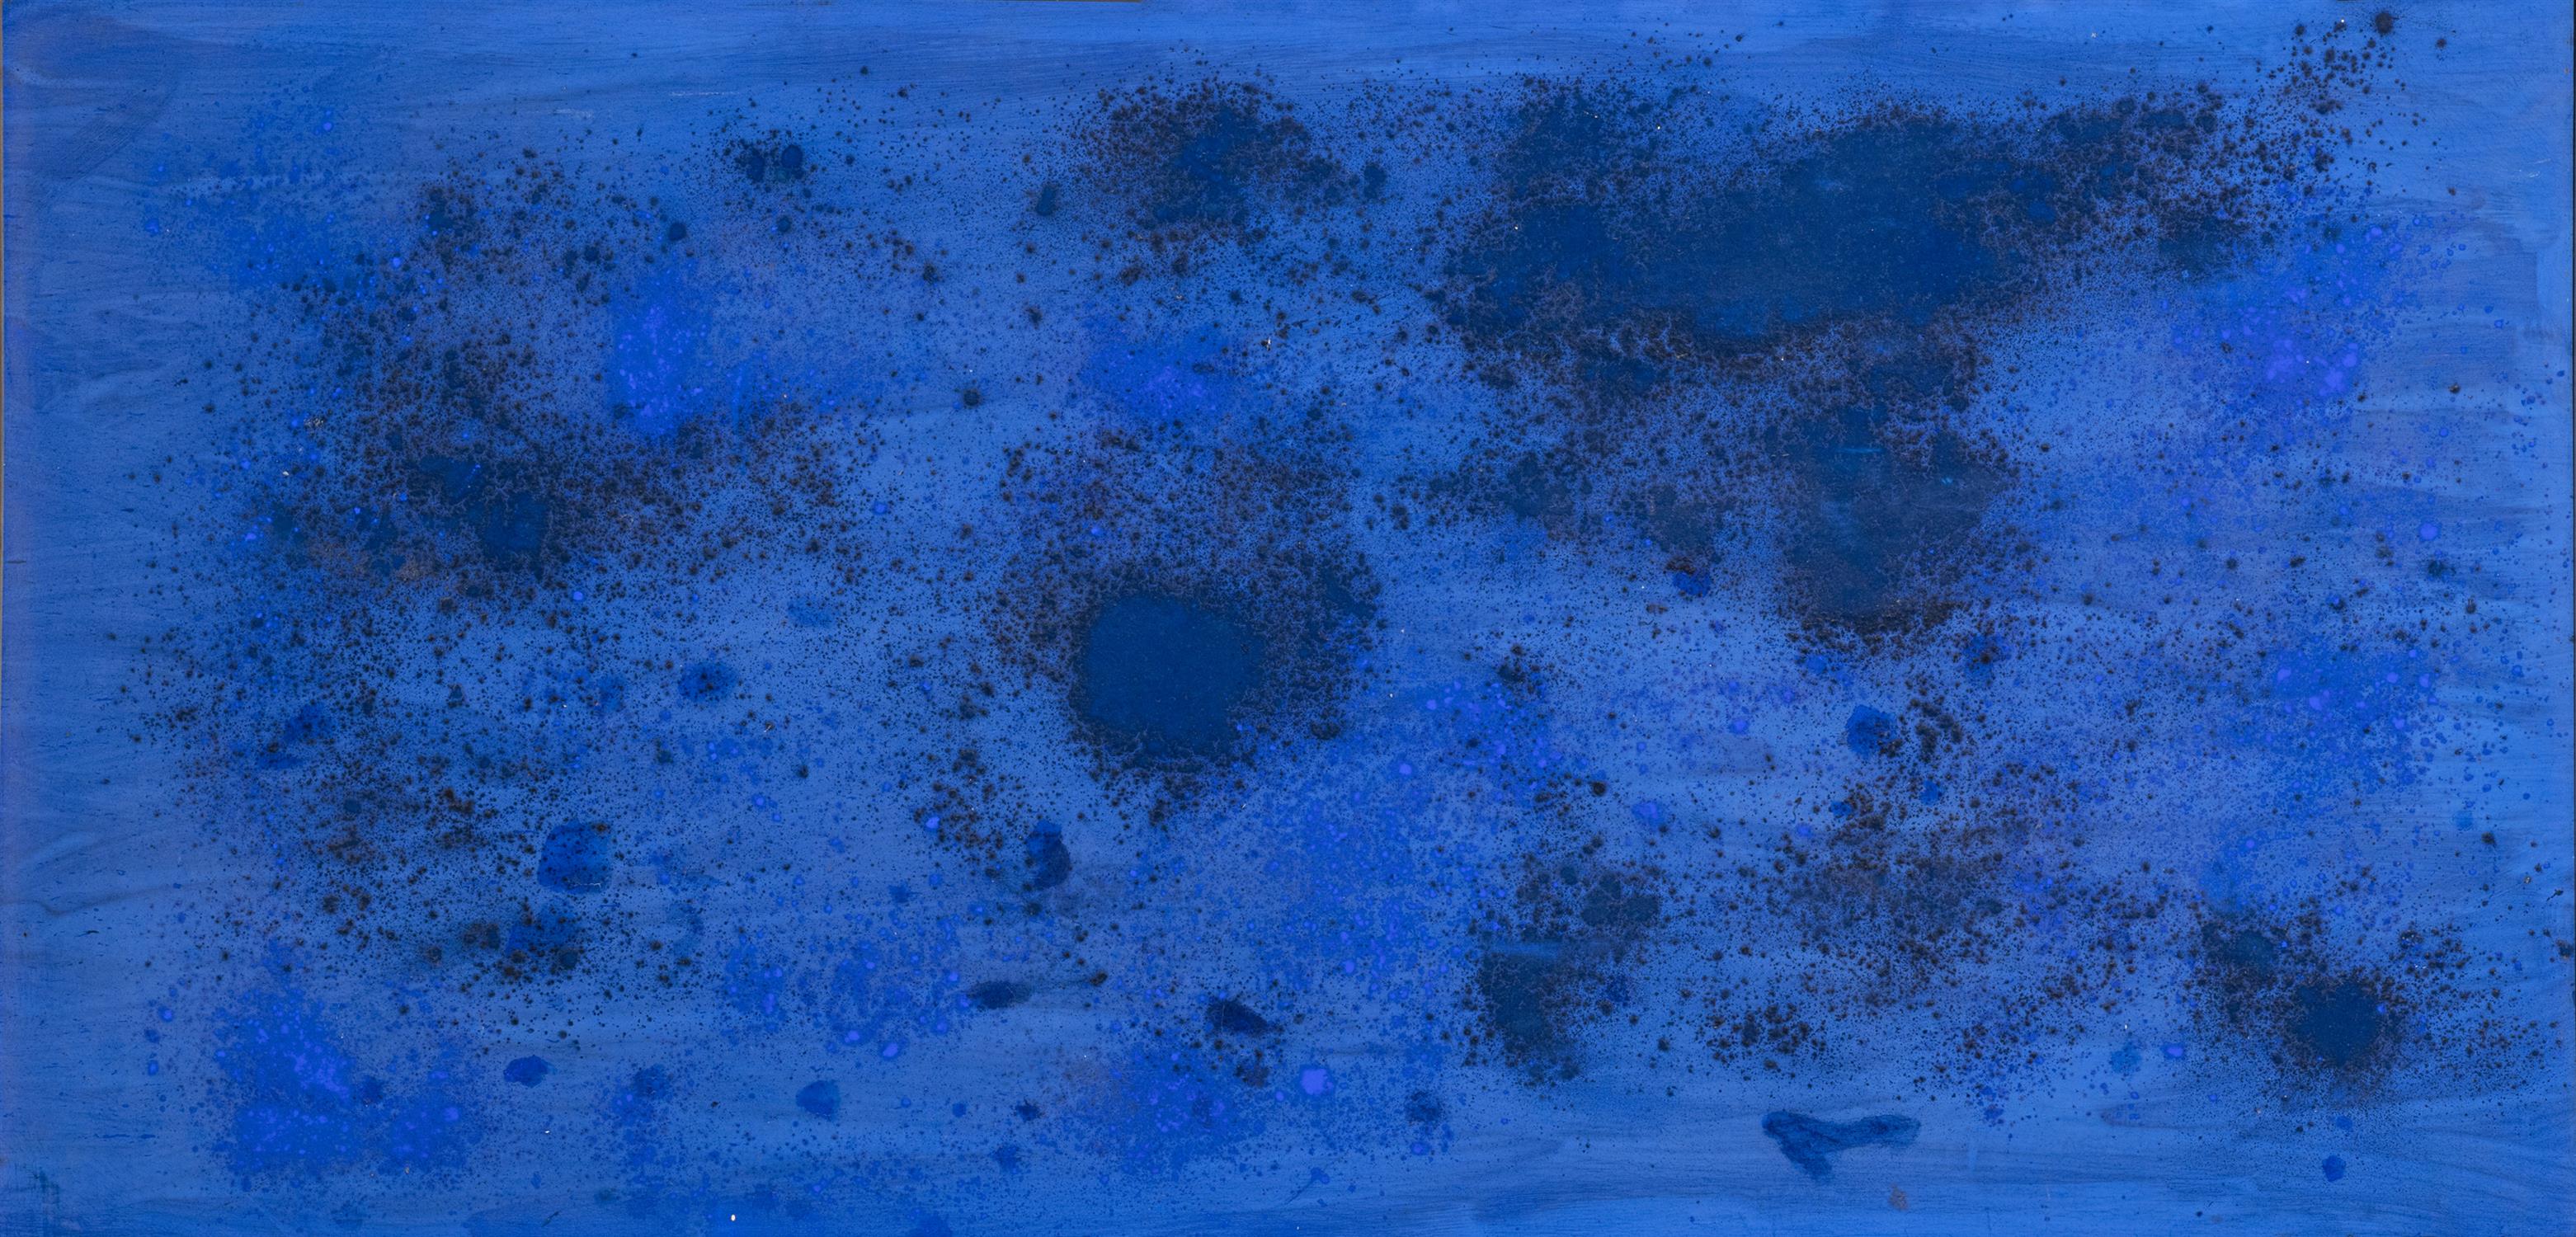 GIULIO TURCATO (1912 -1995) Superfiore Bleu Oil on canvas, 60 x 120cm Signed (bottom